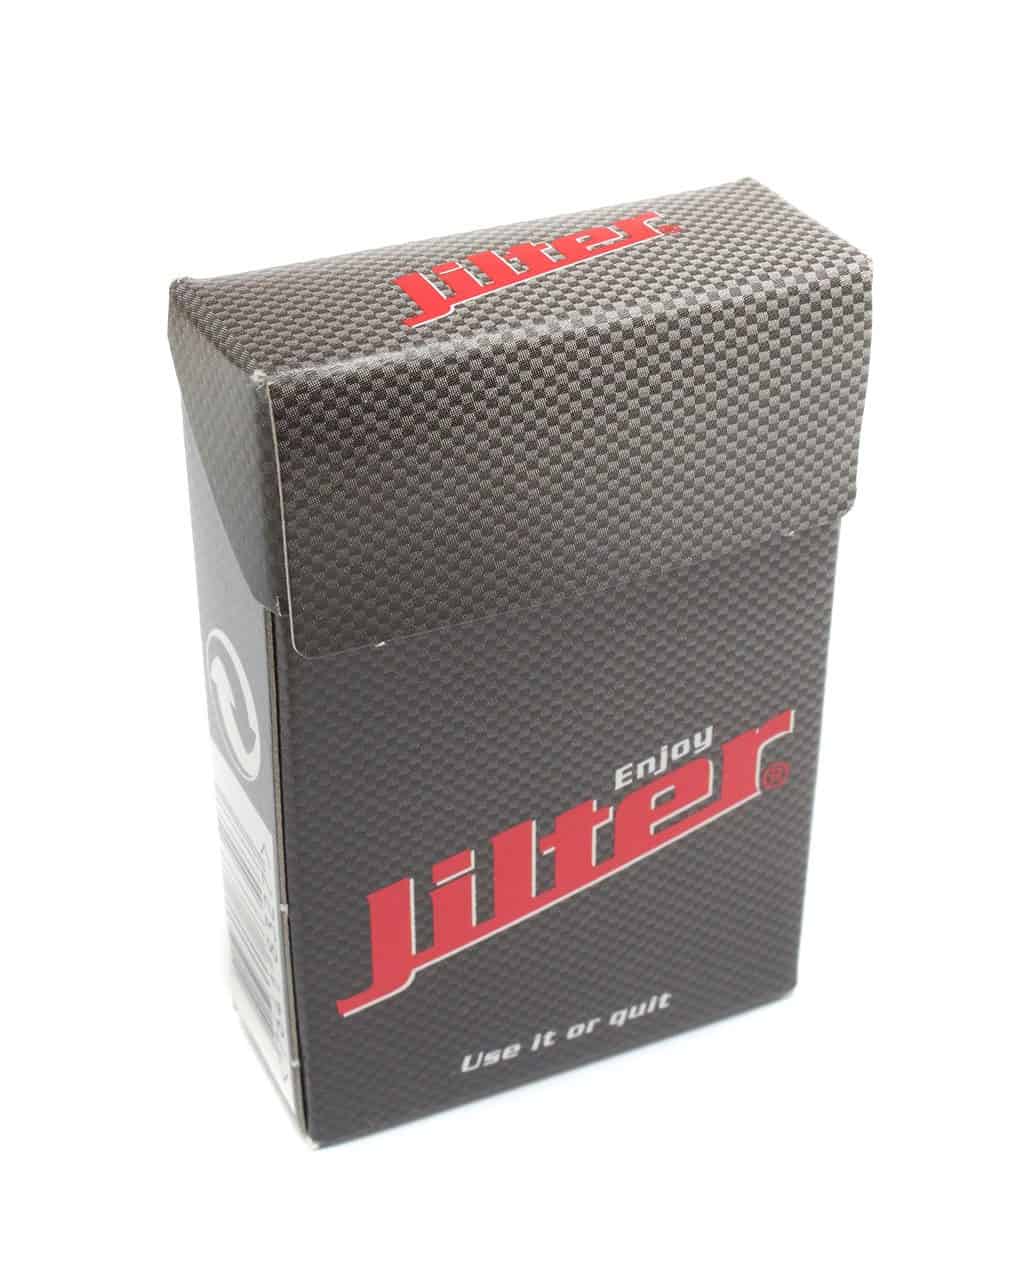 Filter &amp;aktivt kul JILTER cigaretfilter | 42 stk.